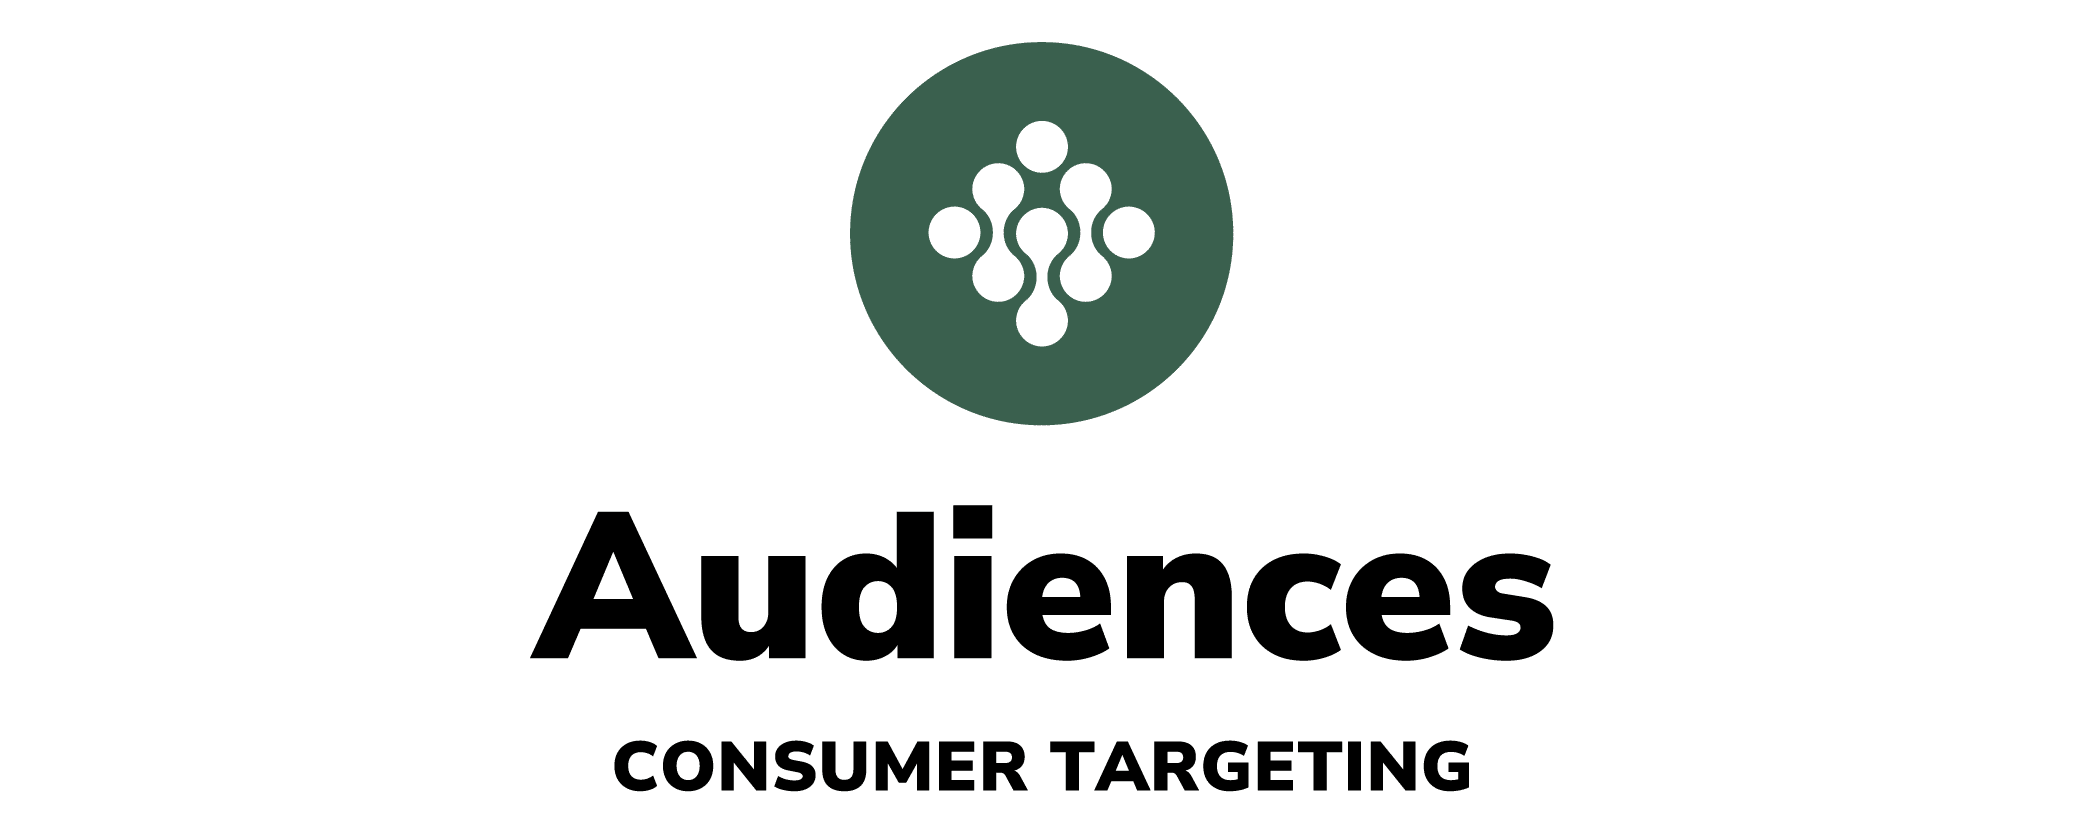 Audiences Consumer Targeting